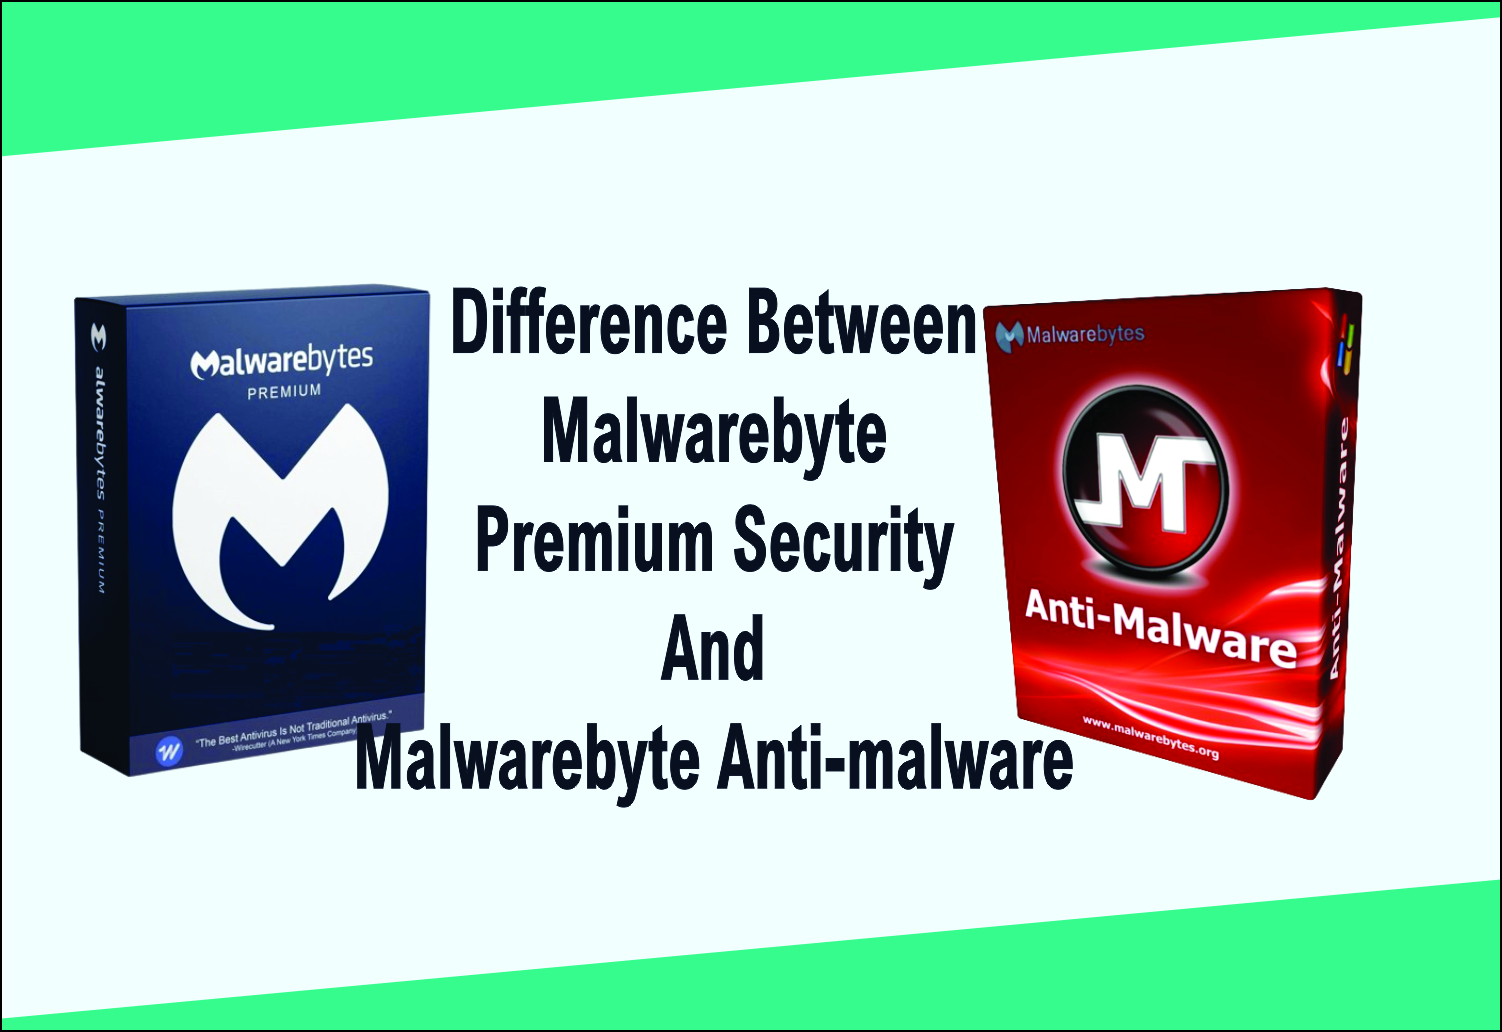 Difference Between Malwarebytes Premium Security And Malwarebytes Anti-Malware.